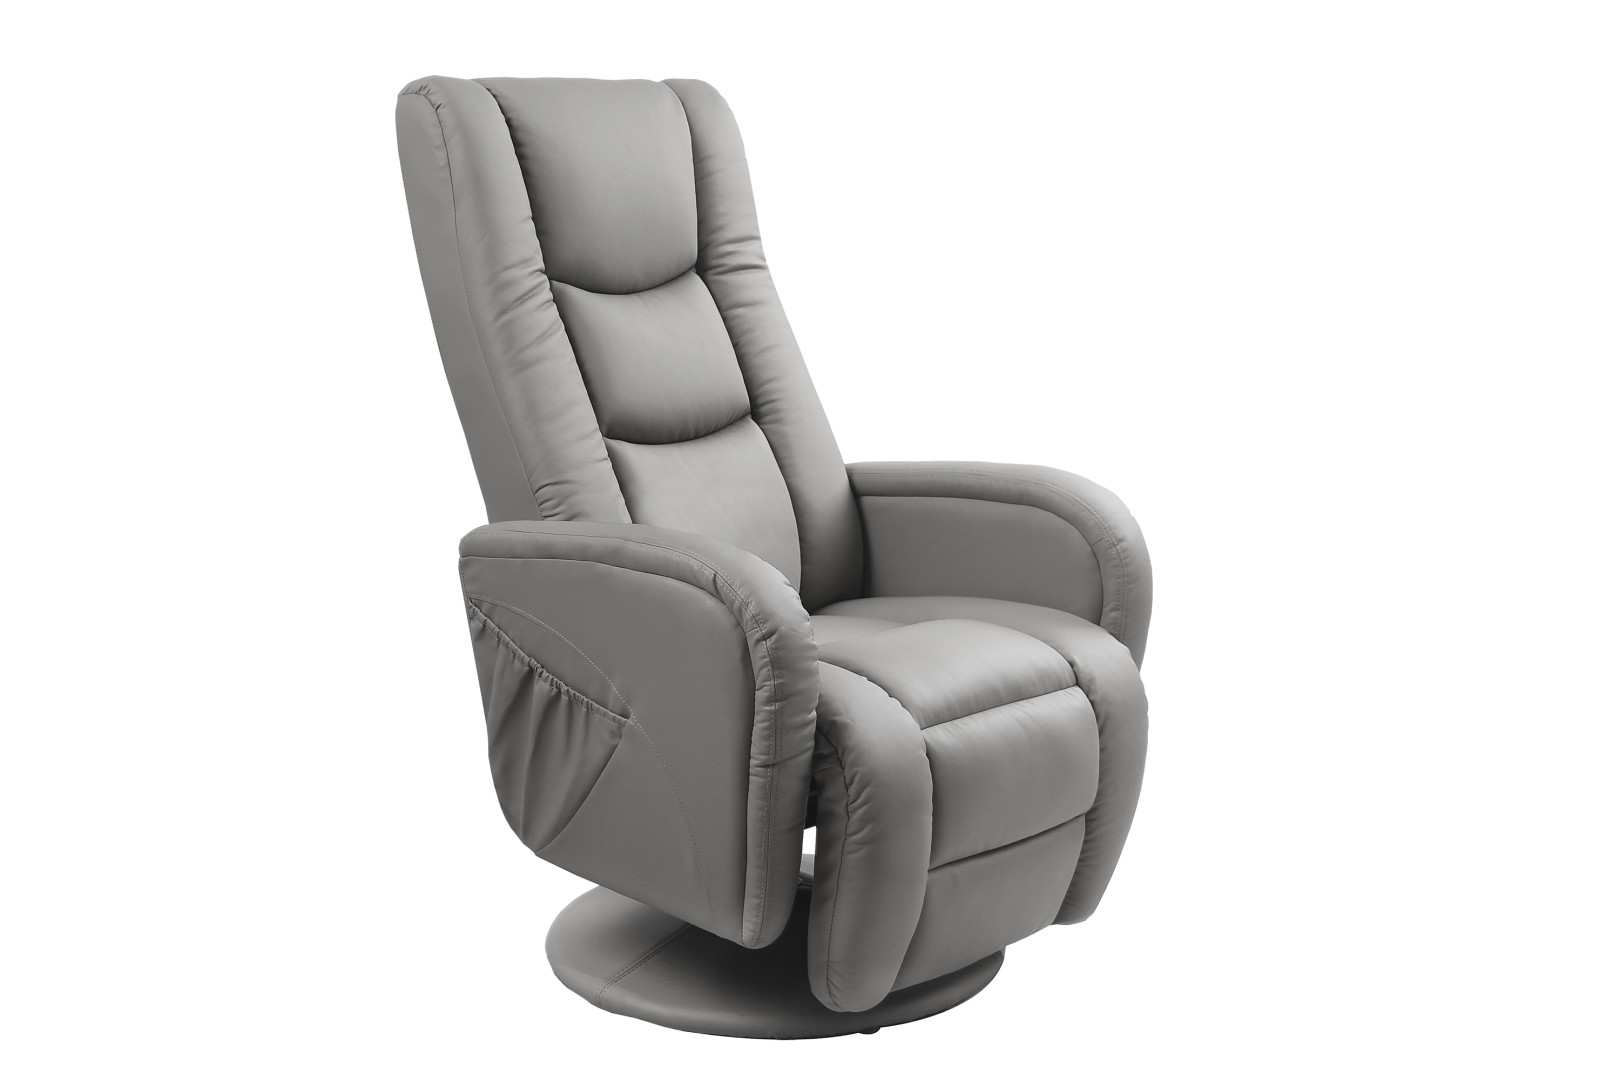 Produkt w kategorii: Fotele, nazwa produktu: Fotel Pulsar - elegancki mebel relaksacyjny